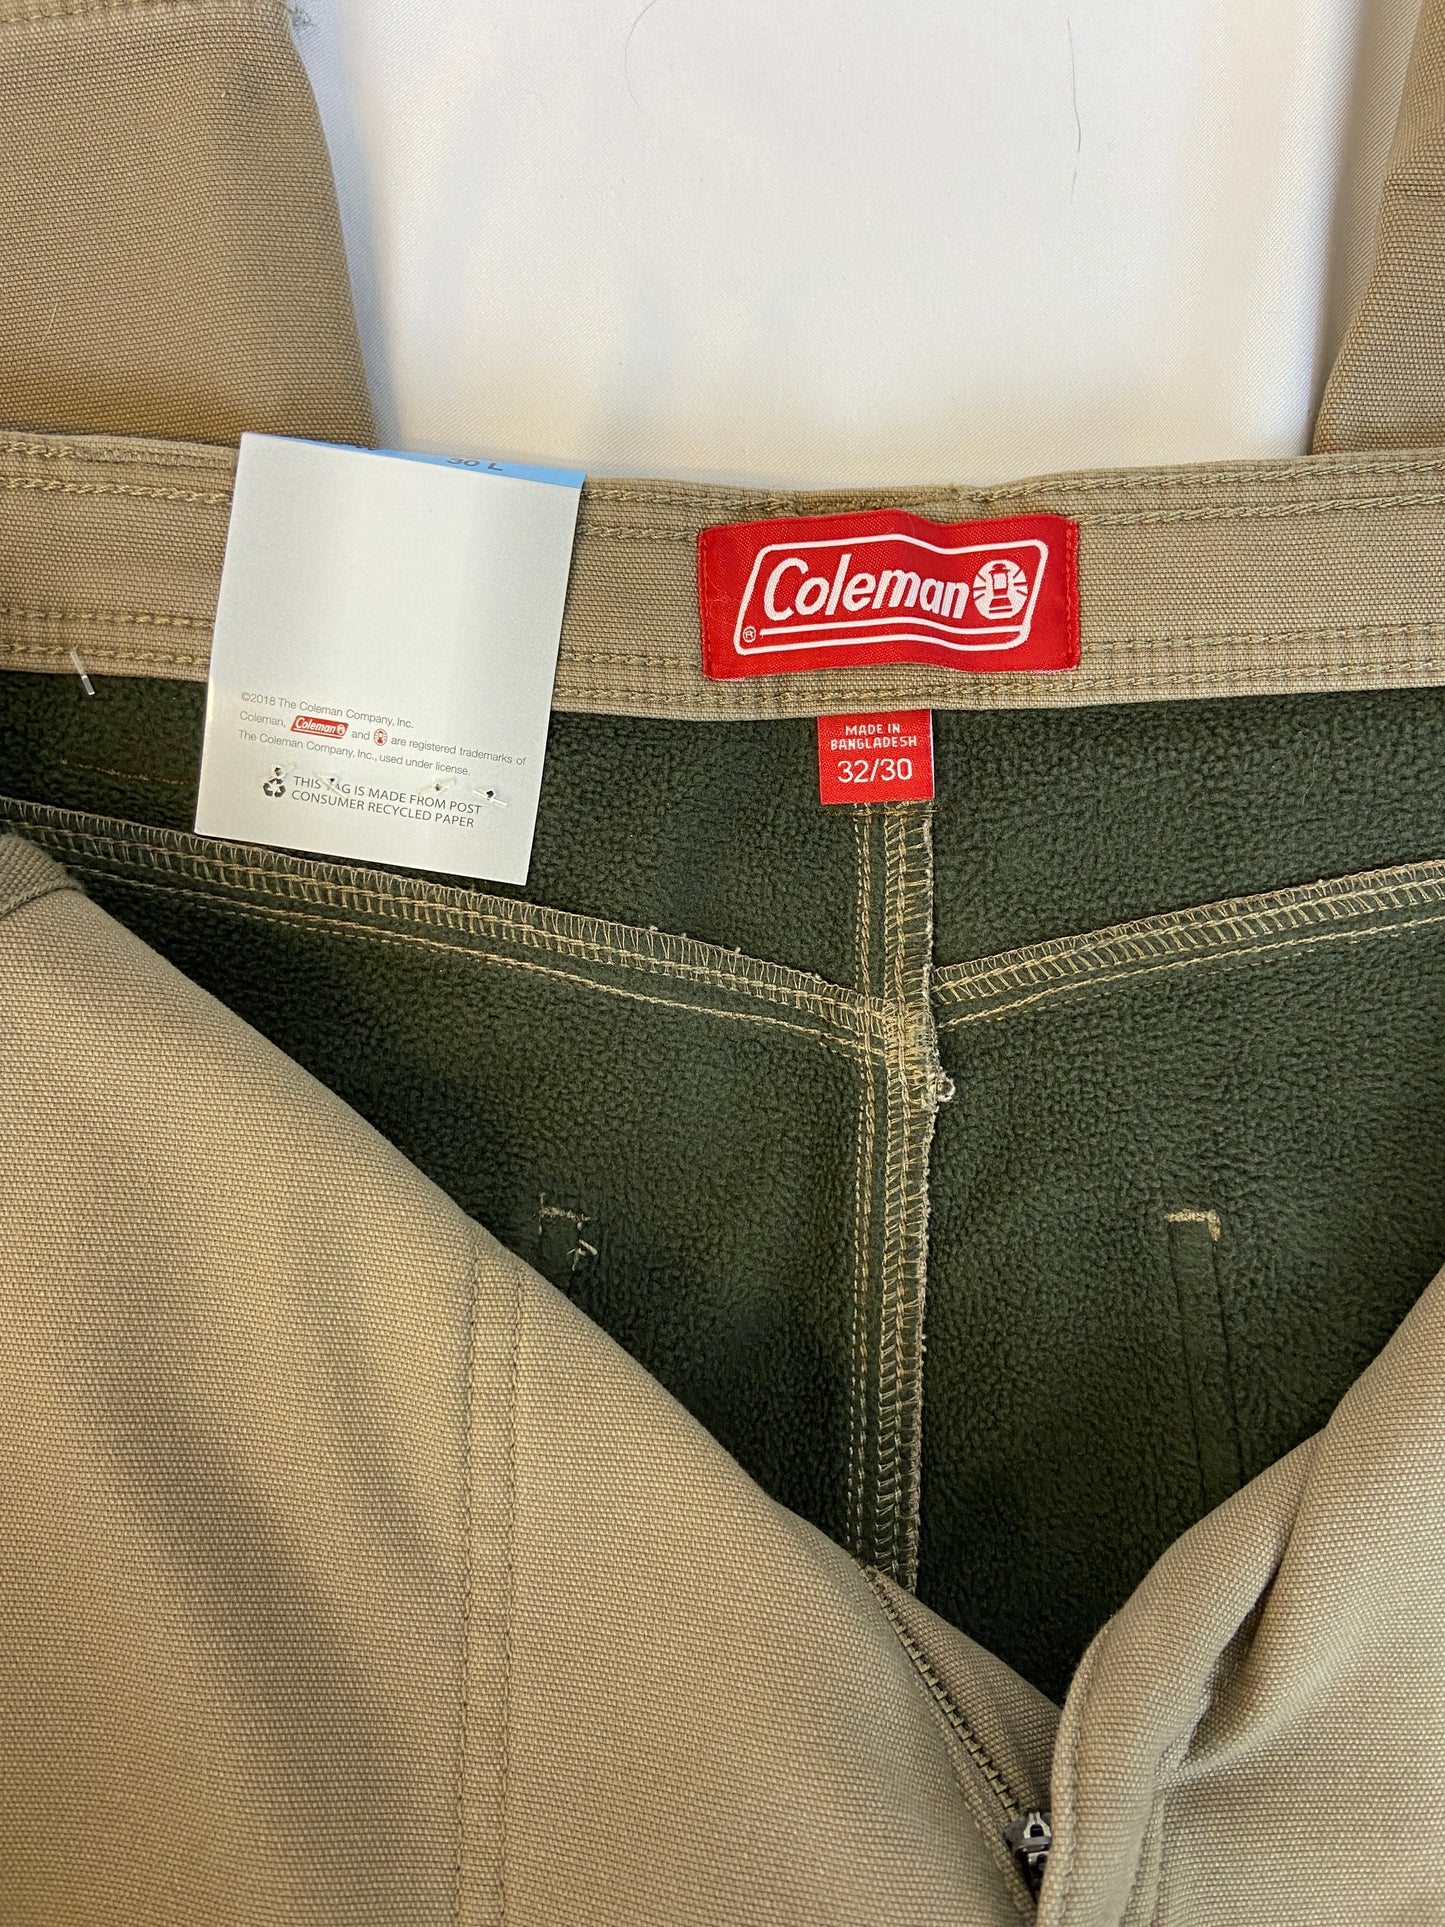 Coleman Size 32 x 30 Khaki Carpenter Pants NWT